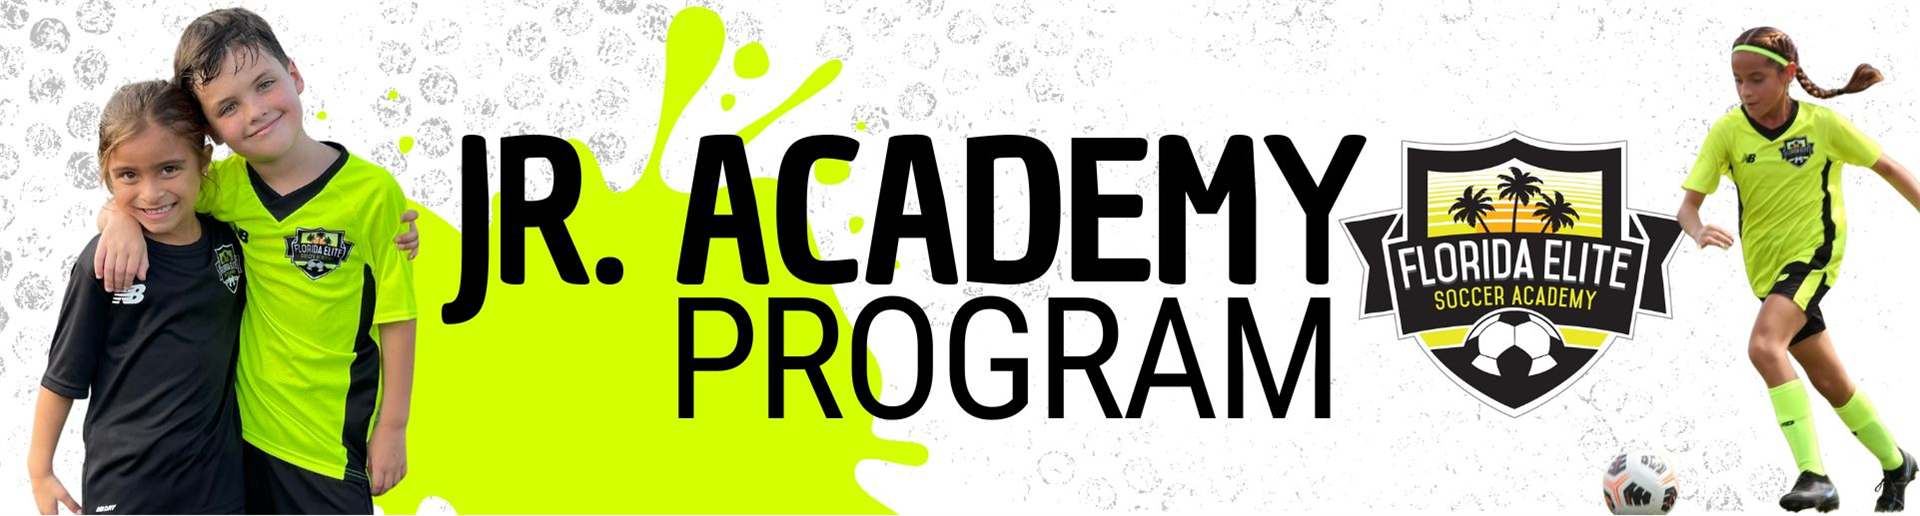 Jr Academy Program